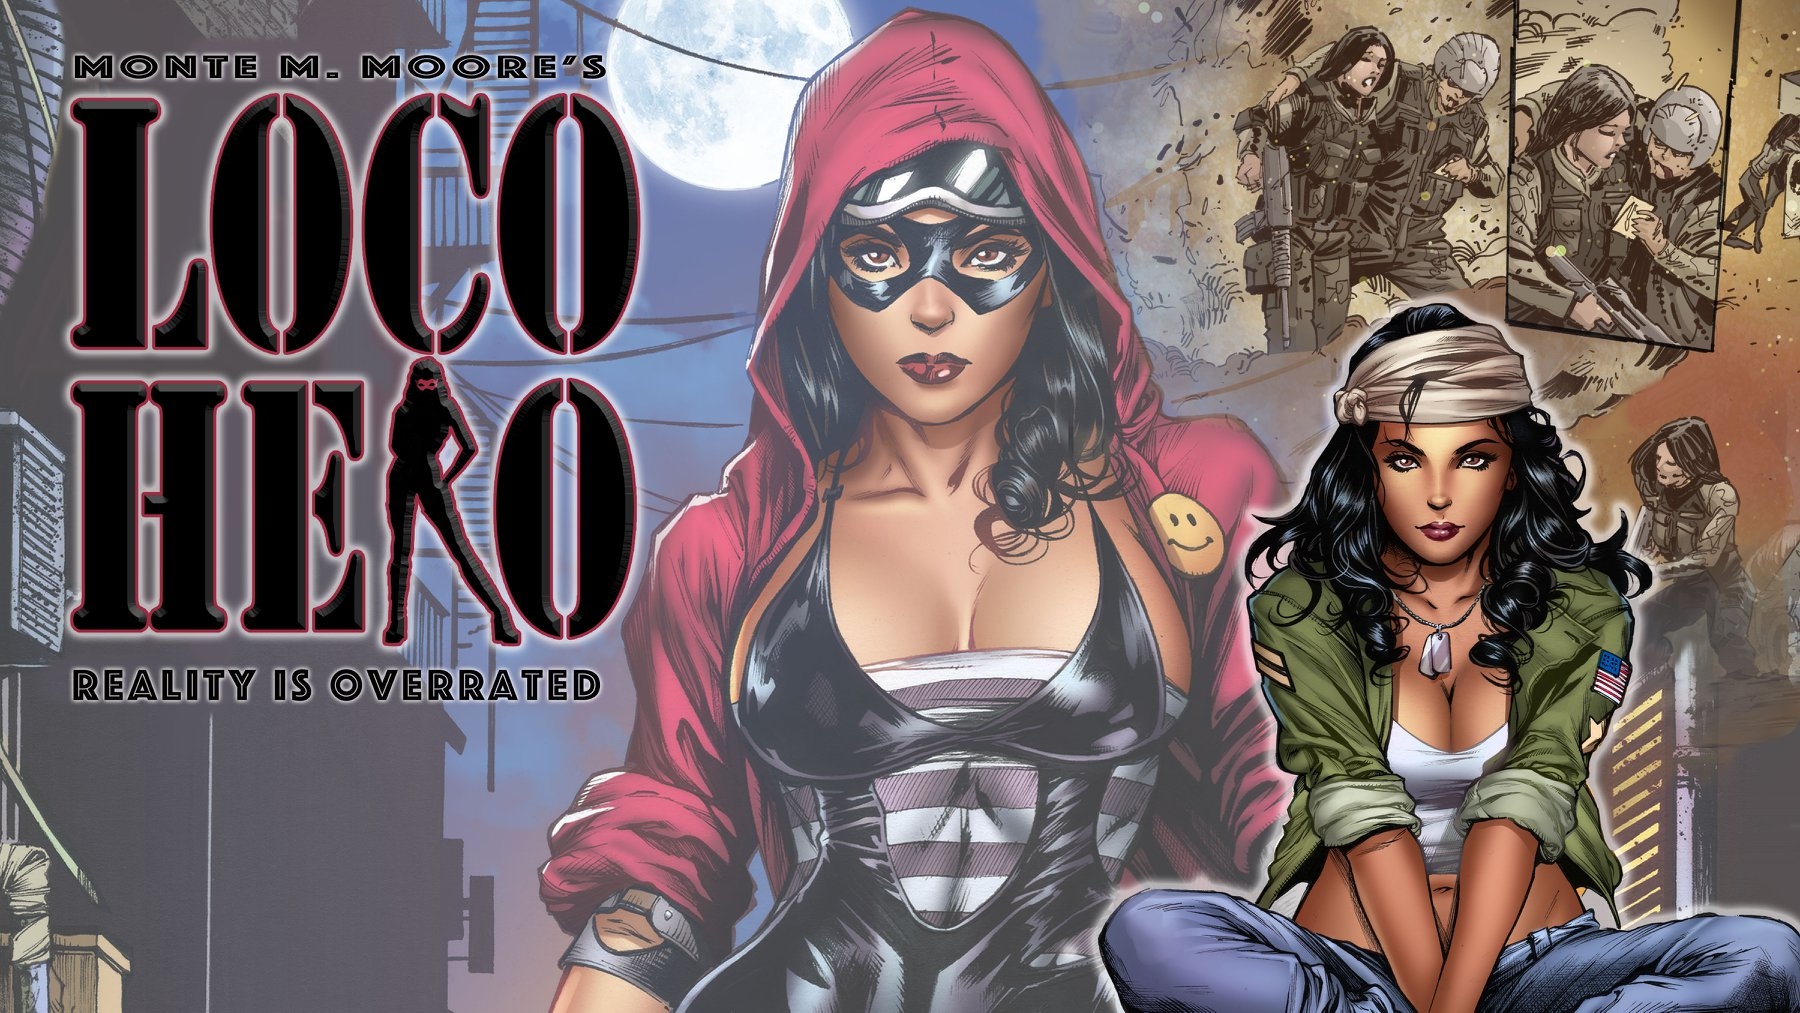 “Loco Hero” from Monte M. Moore Turns Homeless Latina Vet into Superhero Vigilante